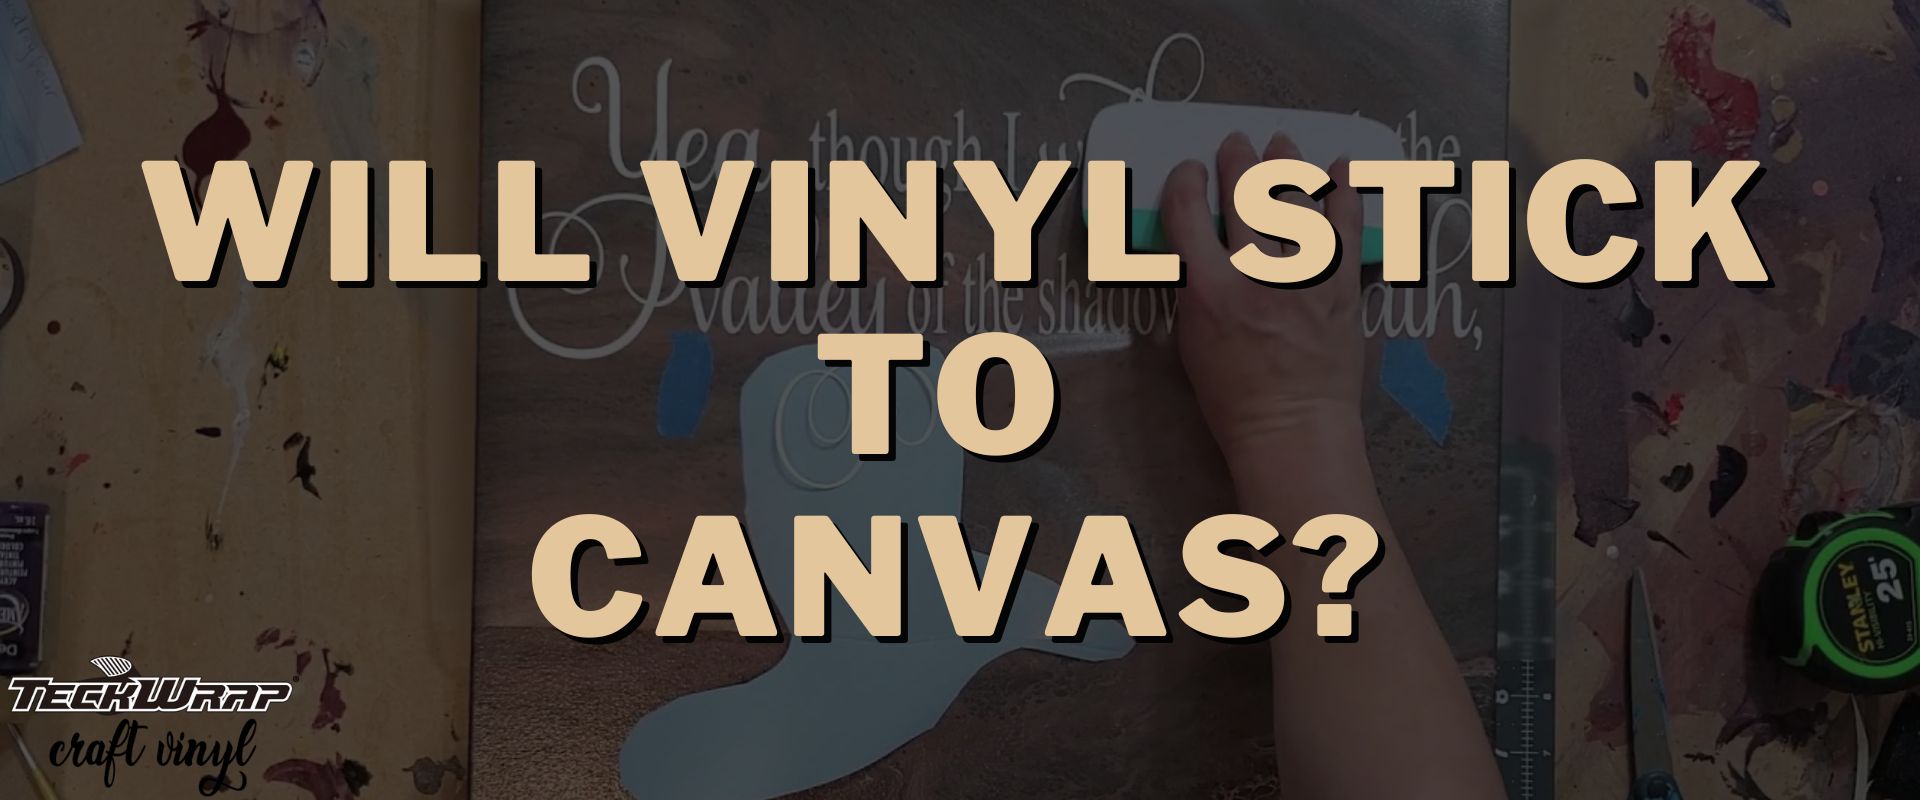 Will Vinyl Stick To Canvas?